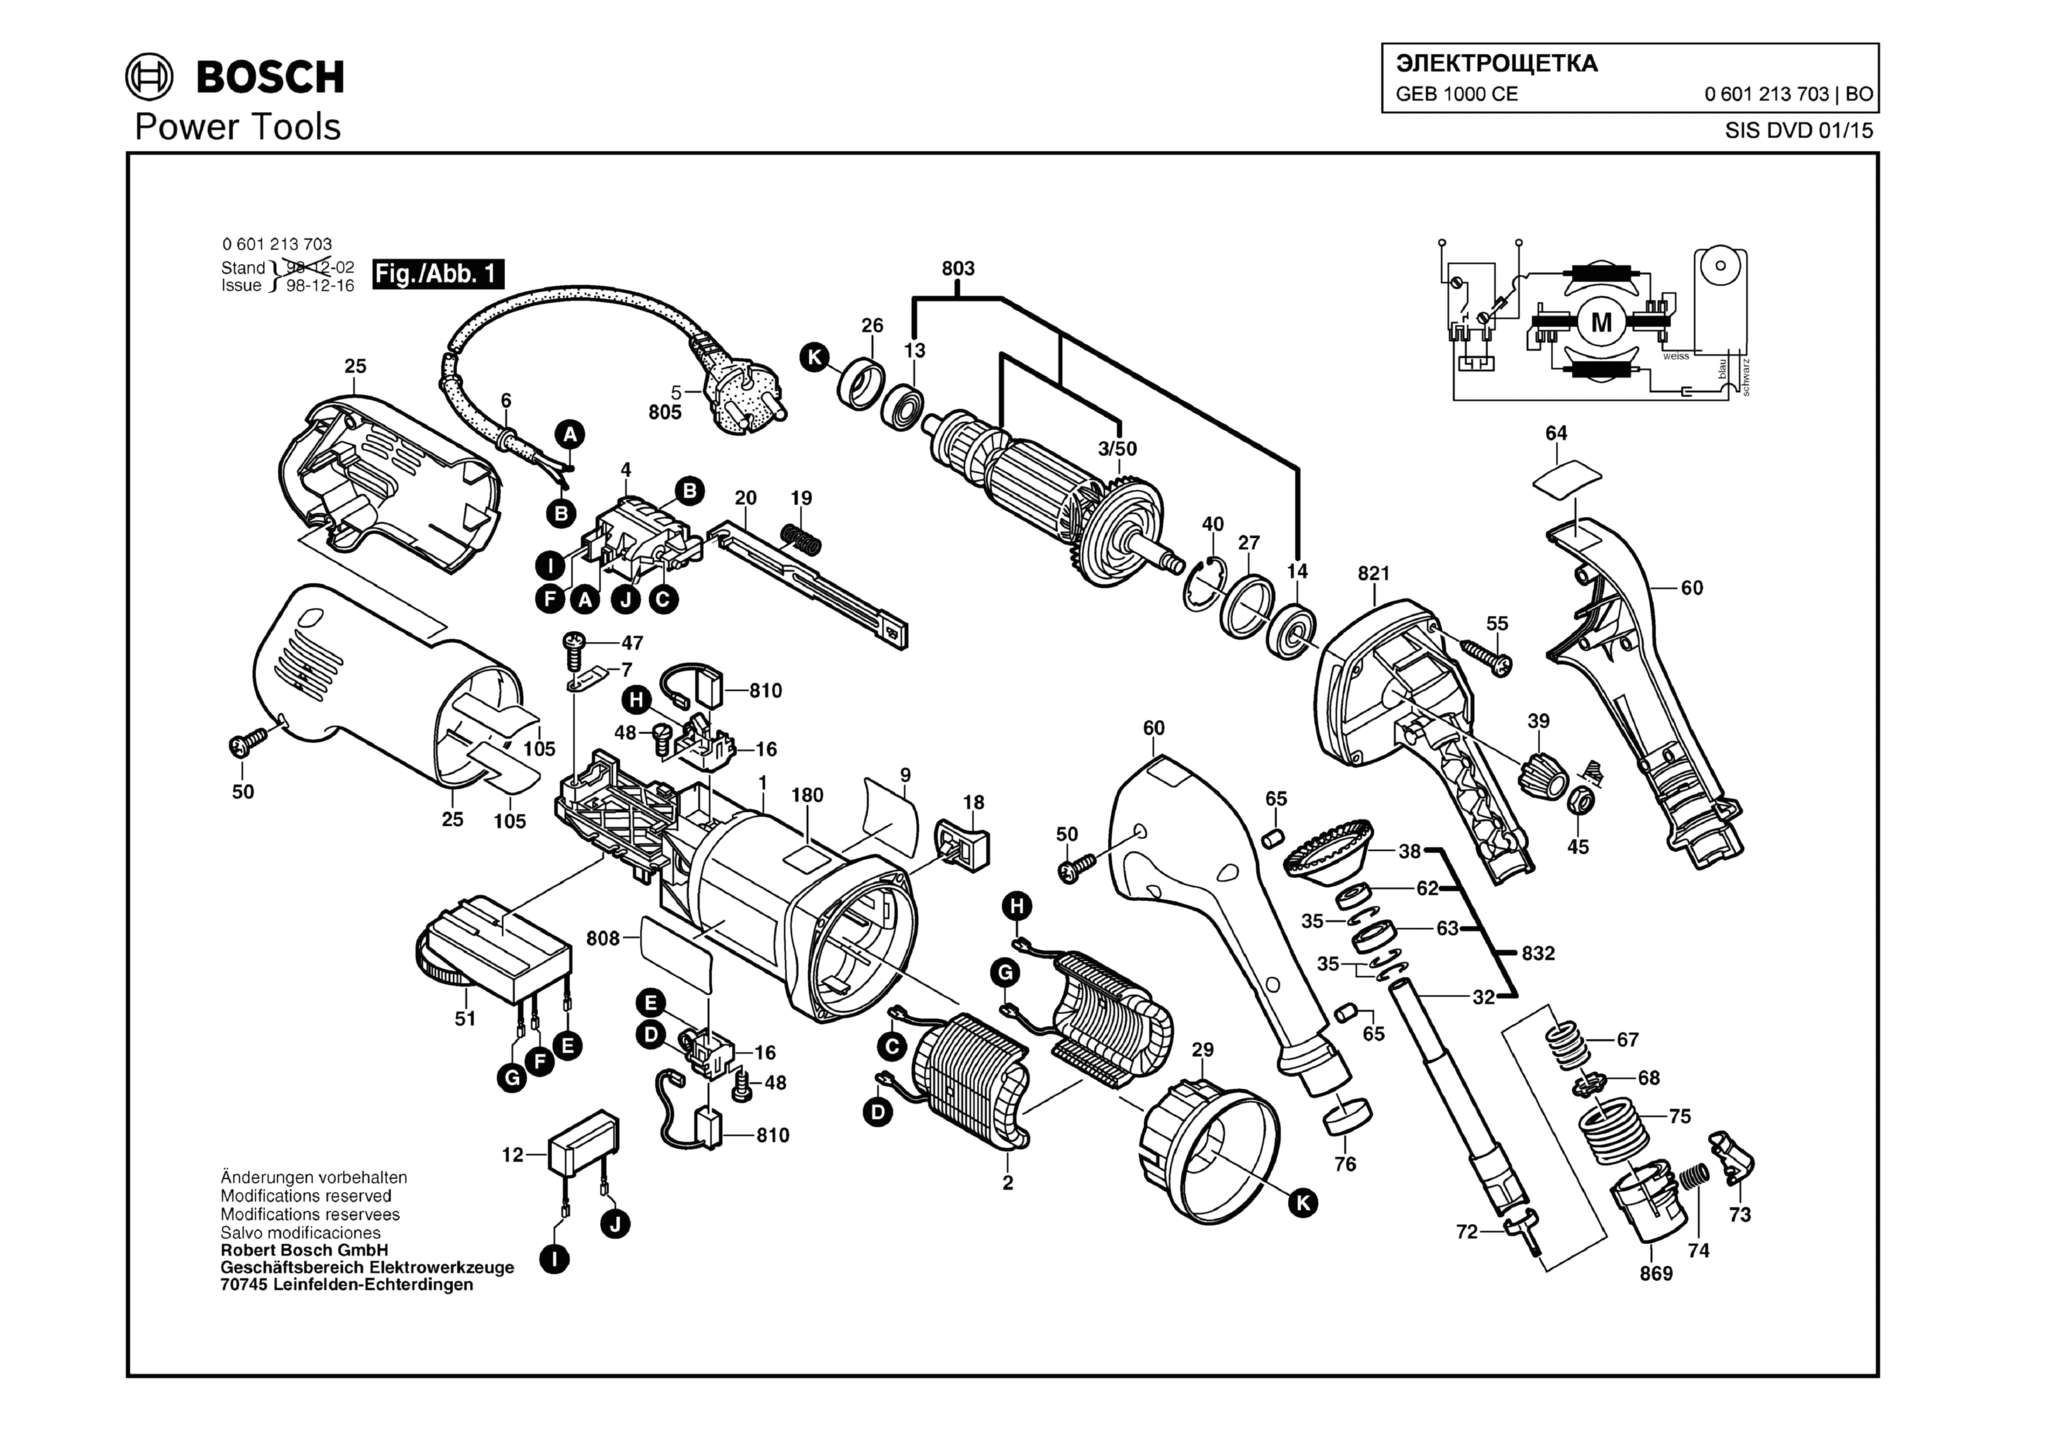 Запчасти, схема и деталировка Bosch GEB 1000 CE (ТИП 0601213703)